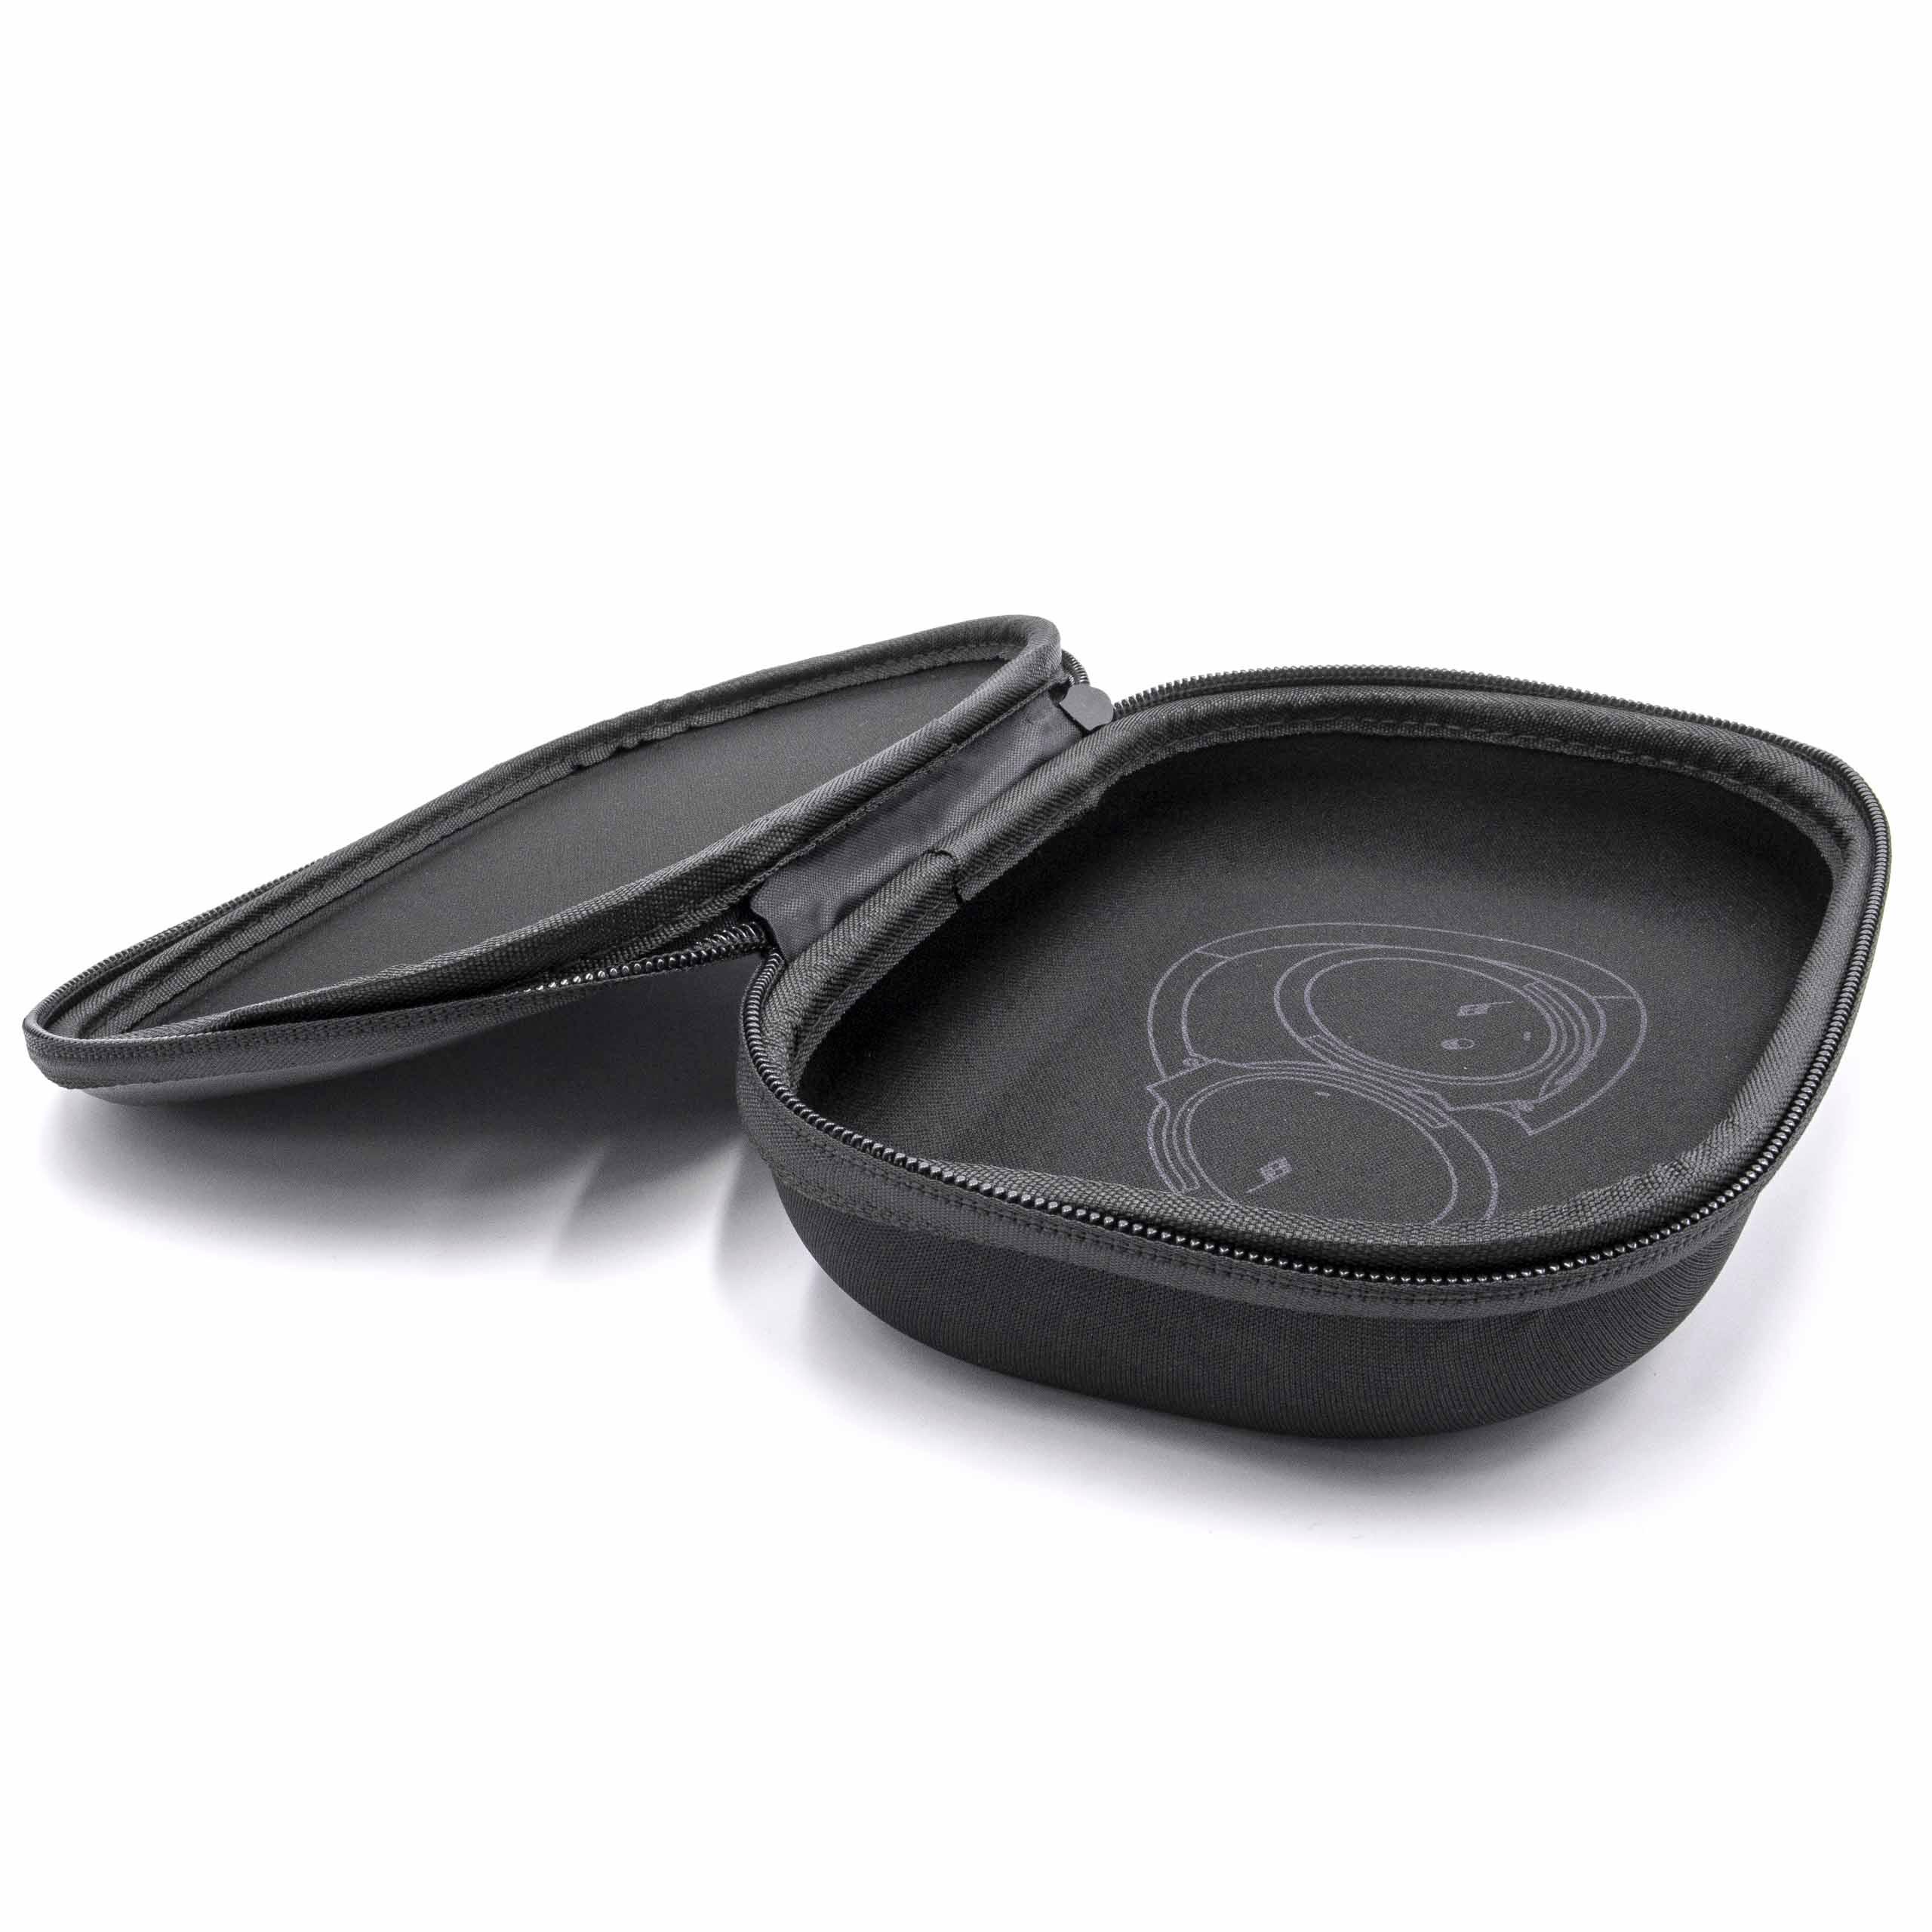 Transport Case suitable for Bose QuietComfort Headphones, Headset - Bag, ethylene vinyl acetate (EVA), black